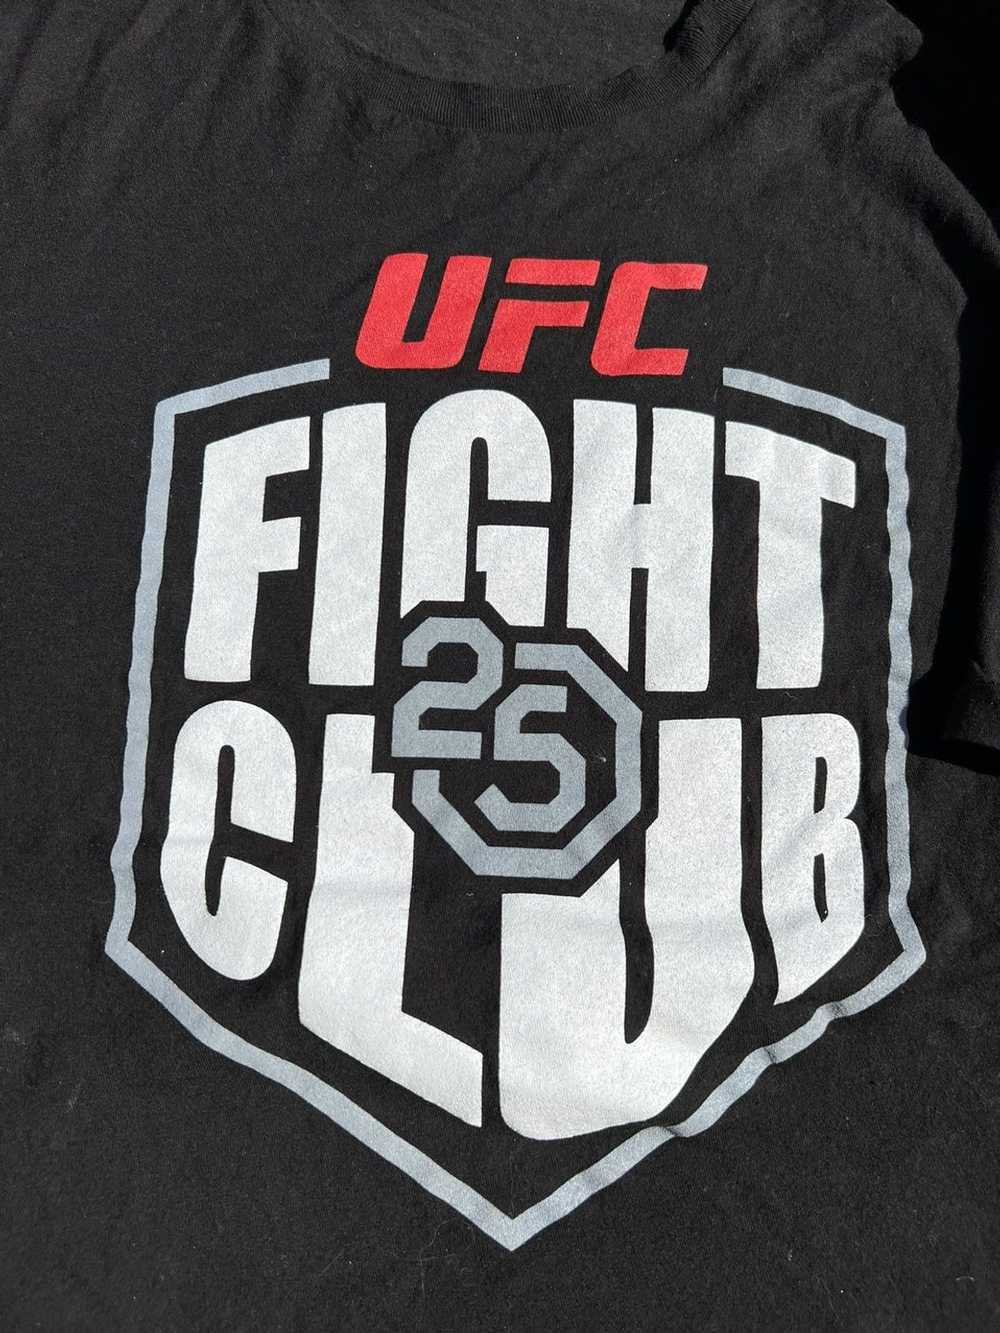 Ufc UFC Fight Club tee - image 2